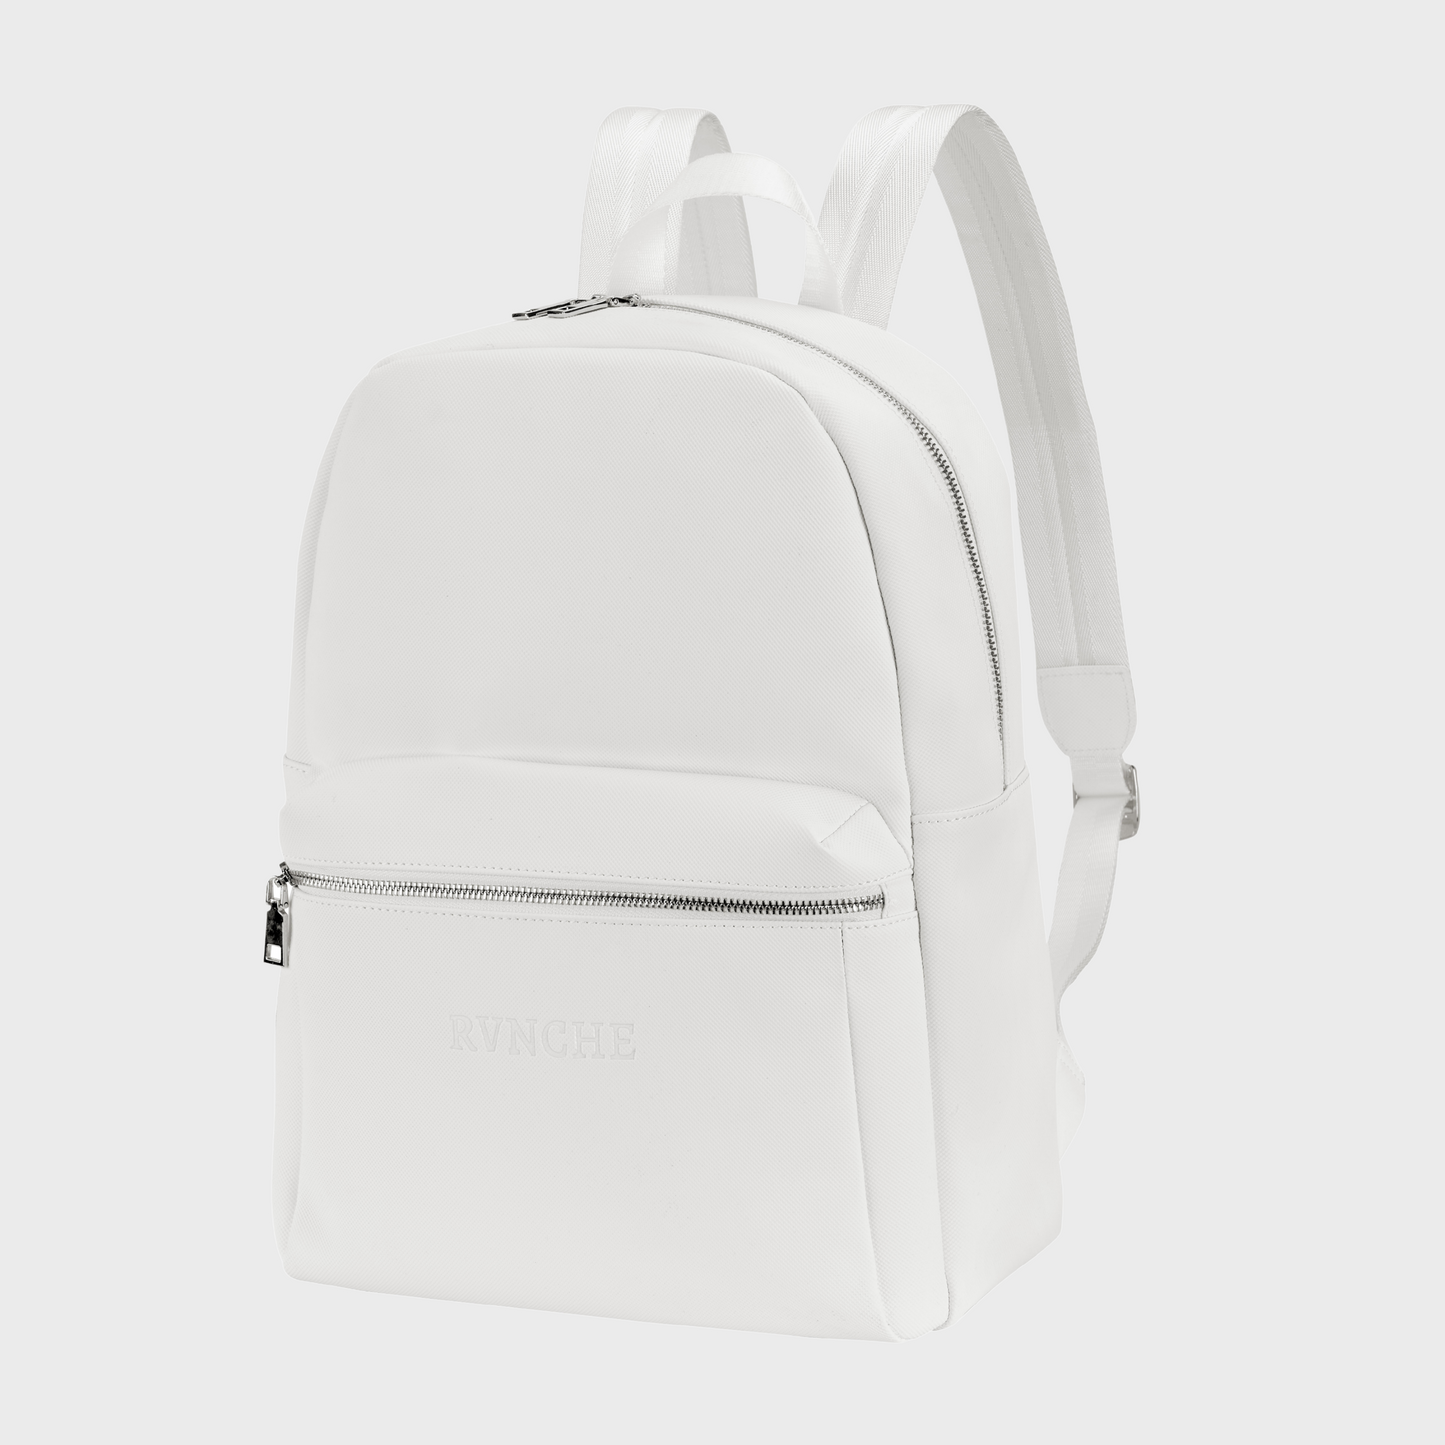 Backpack White - La River